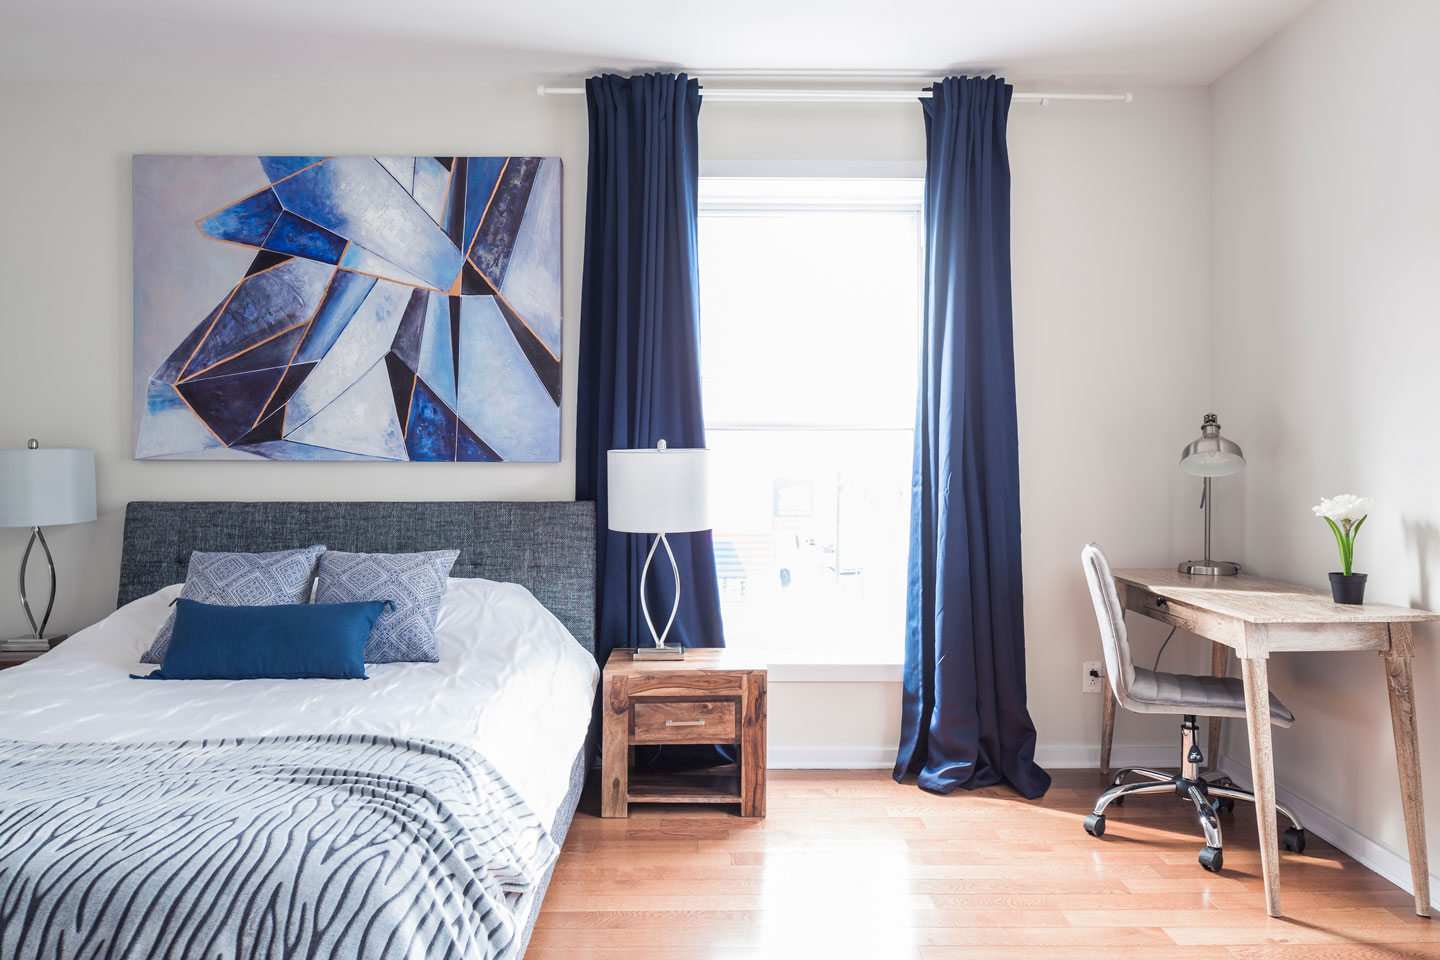 Suite 101: master bedroom with queen bed and memory foam mattress